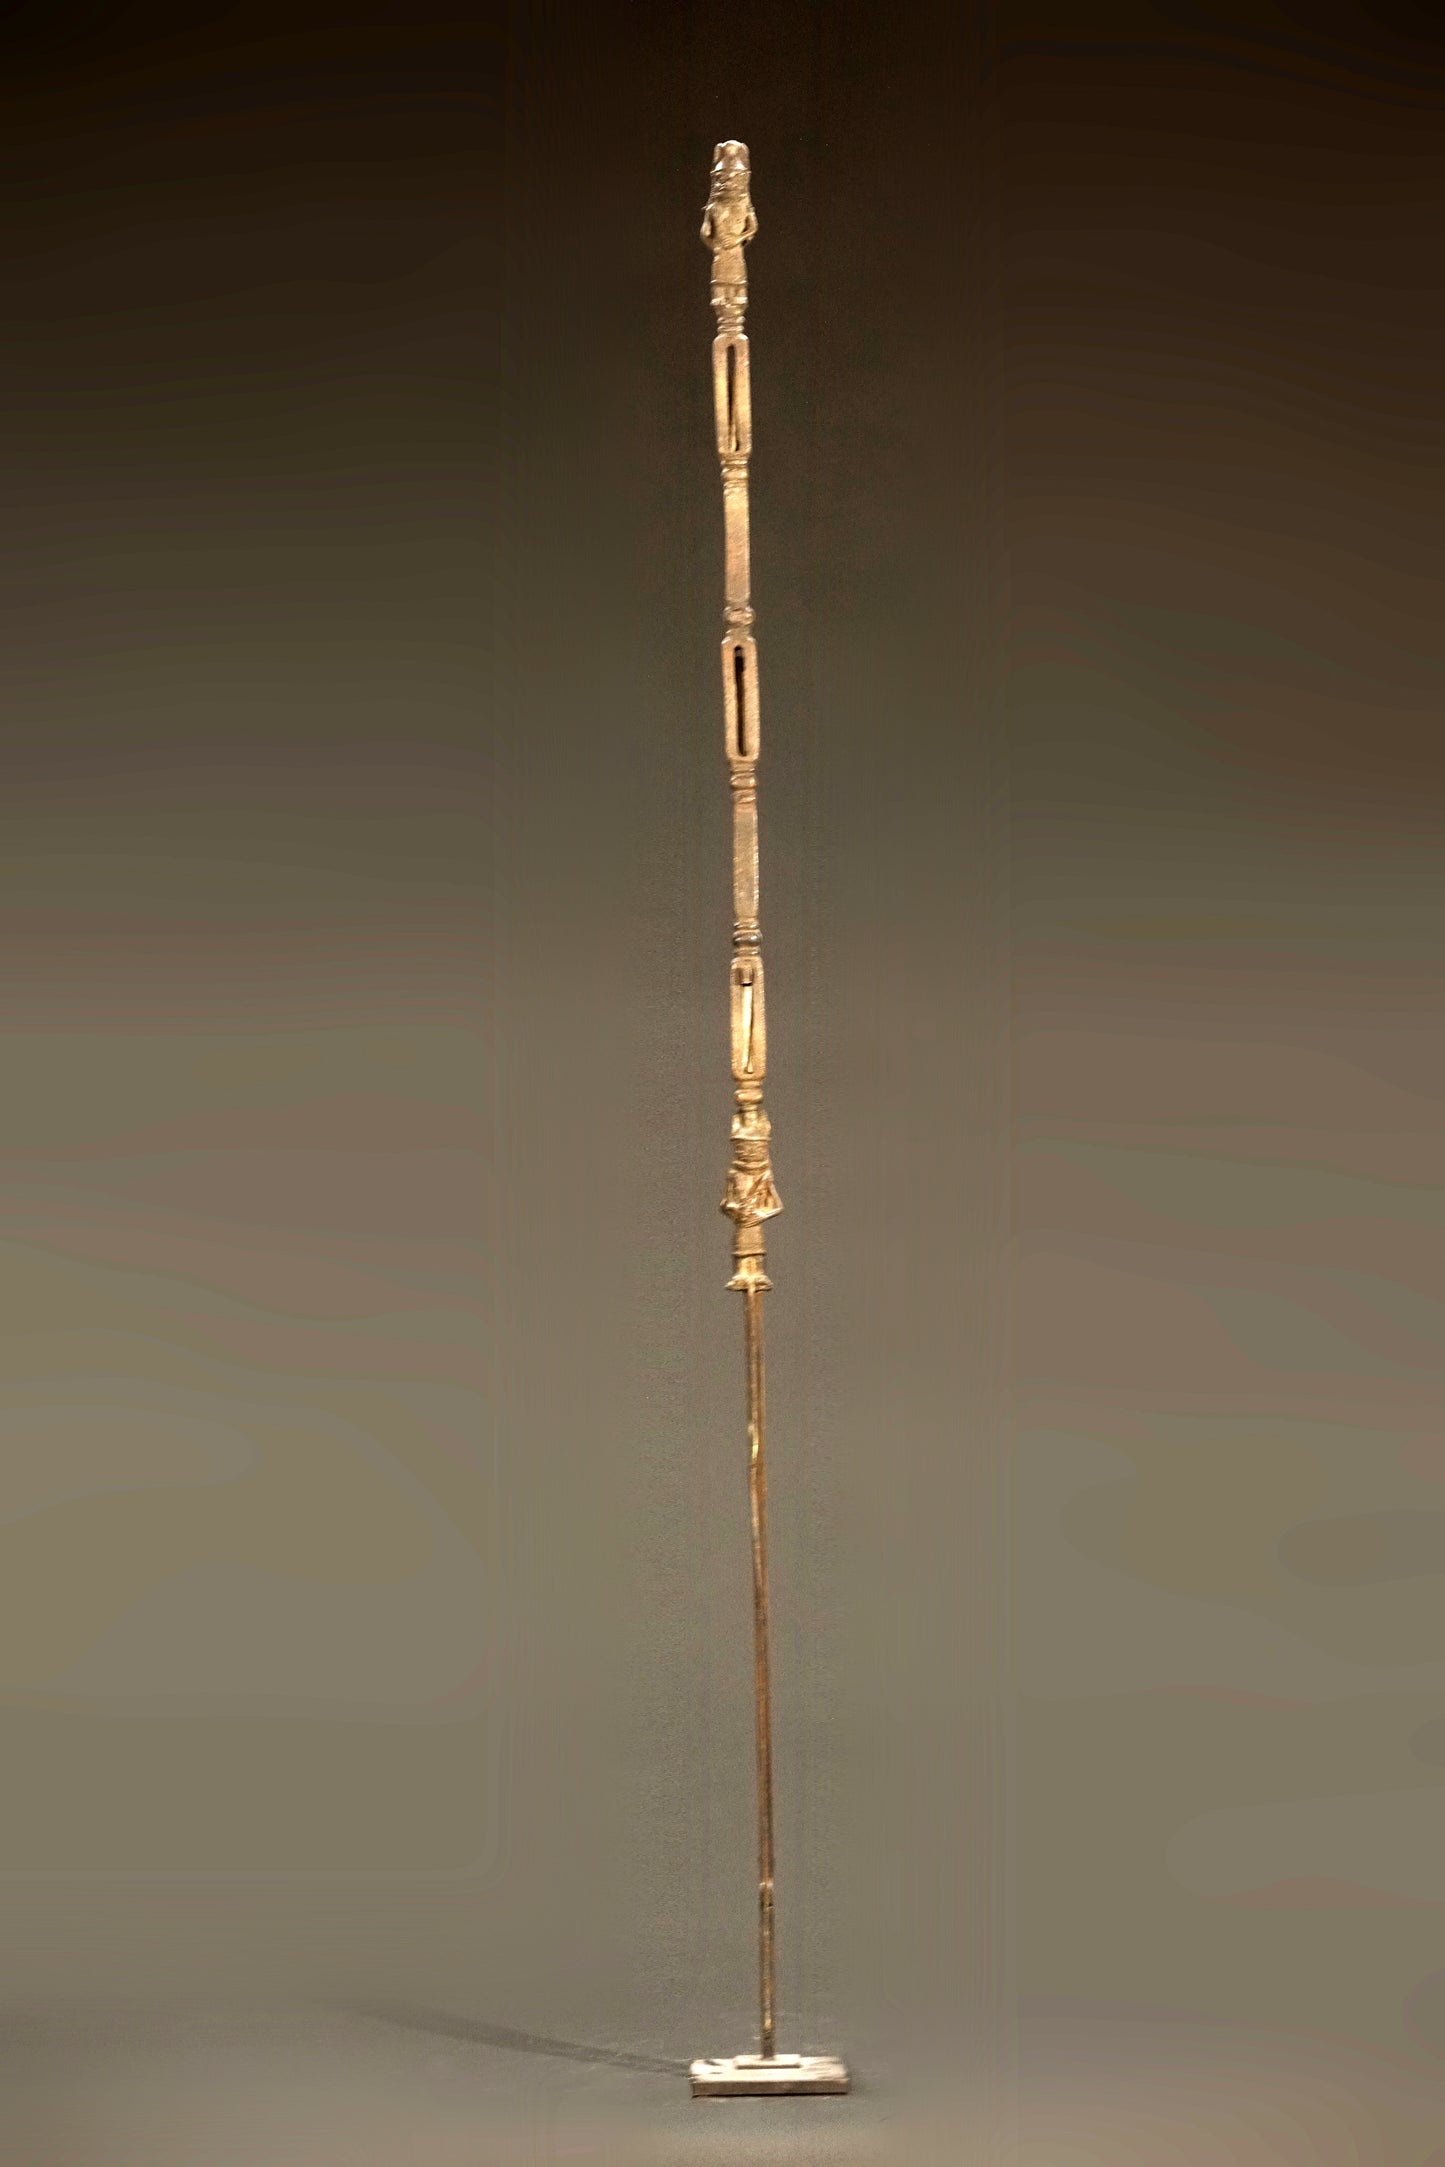 Benin bronze rattle stick